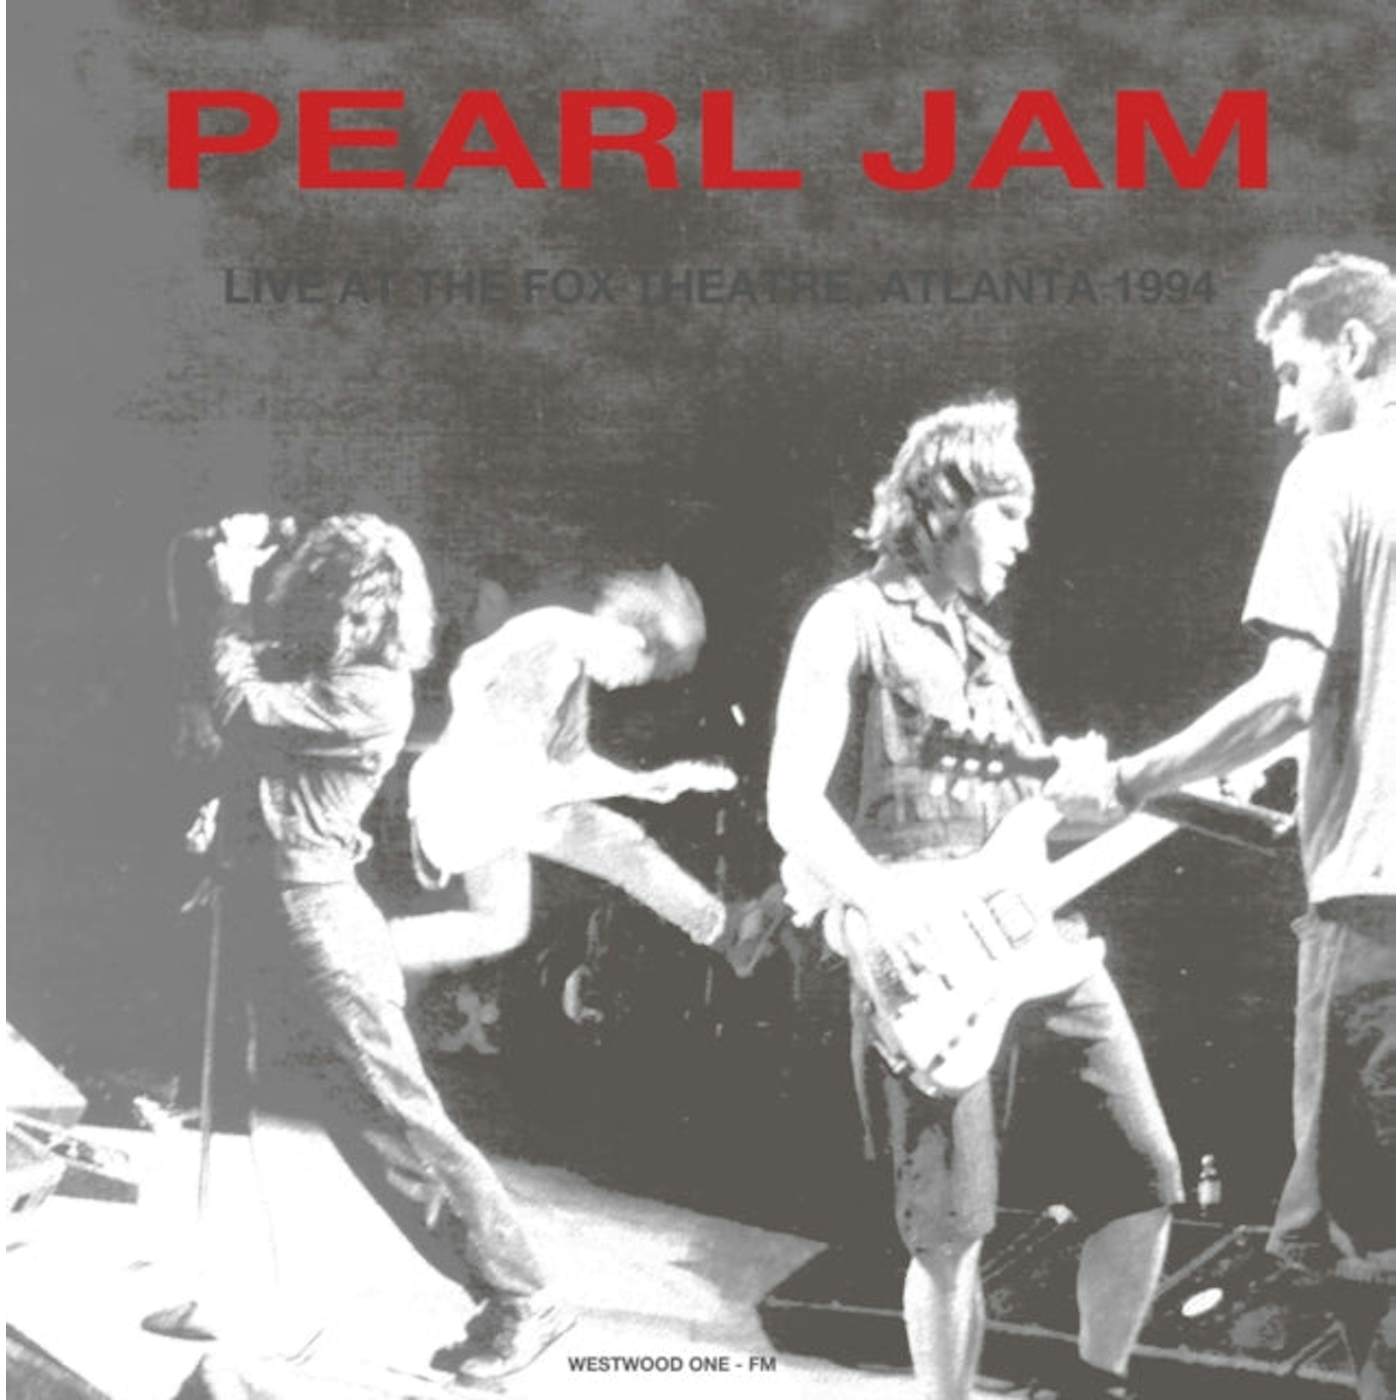 Pearl Jam LP Vinyl Record - Live At The Fox Theatre. Atlanta. Ga - 19 94 (Orange Vinyl)